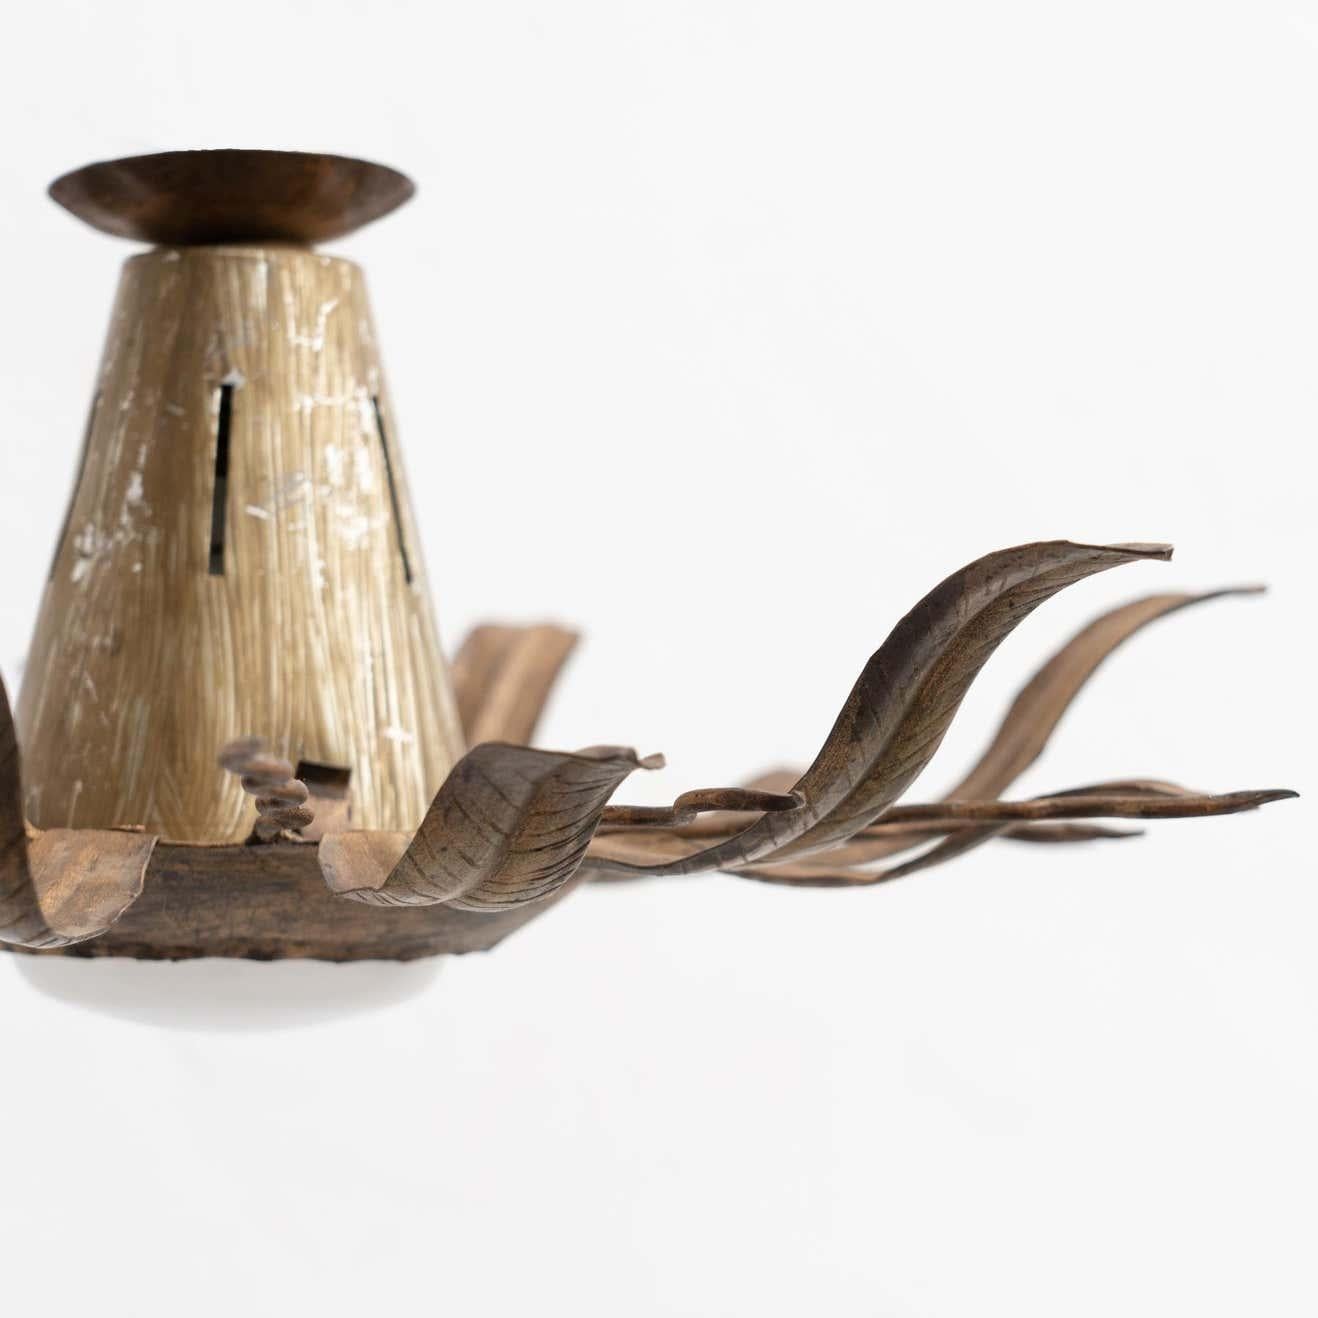 Mid-20th Century Mid-Century Modern Sunburst Brass Ceiling Lamp For Sale